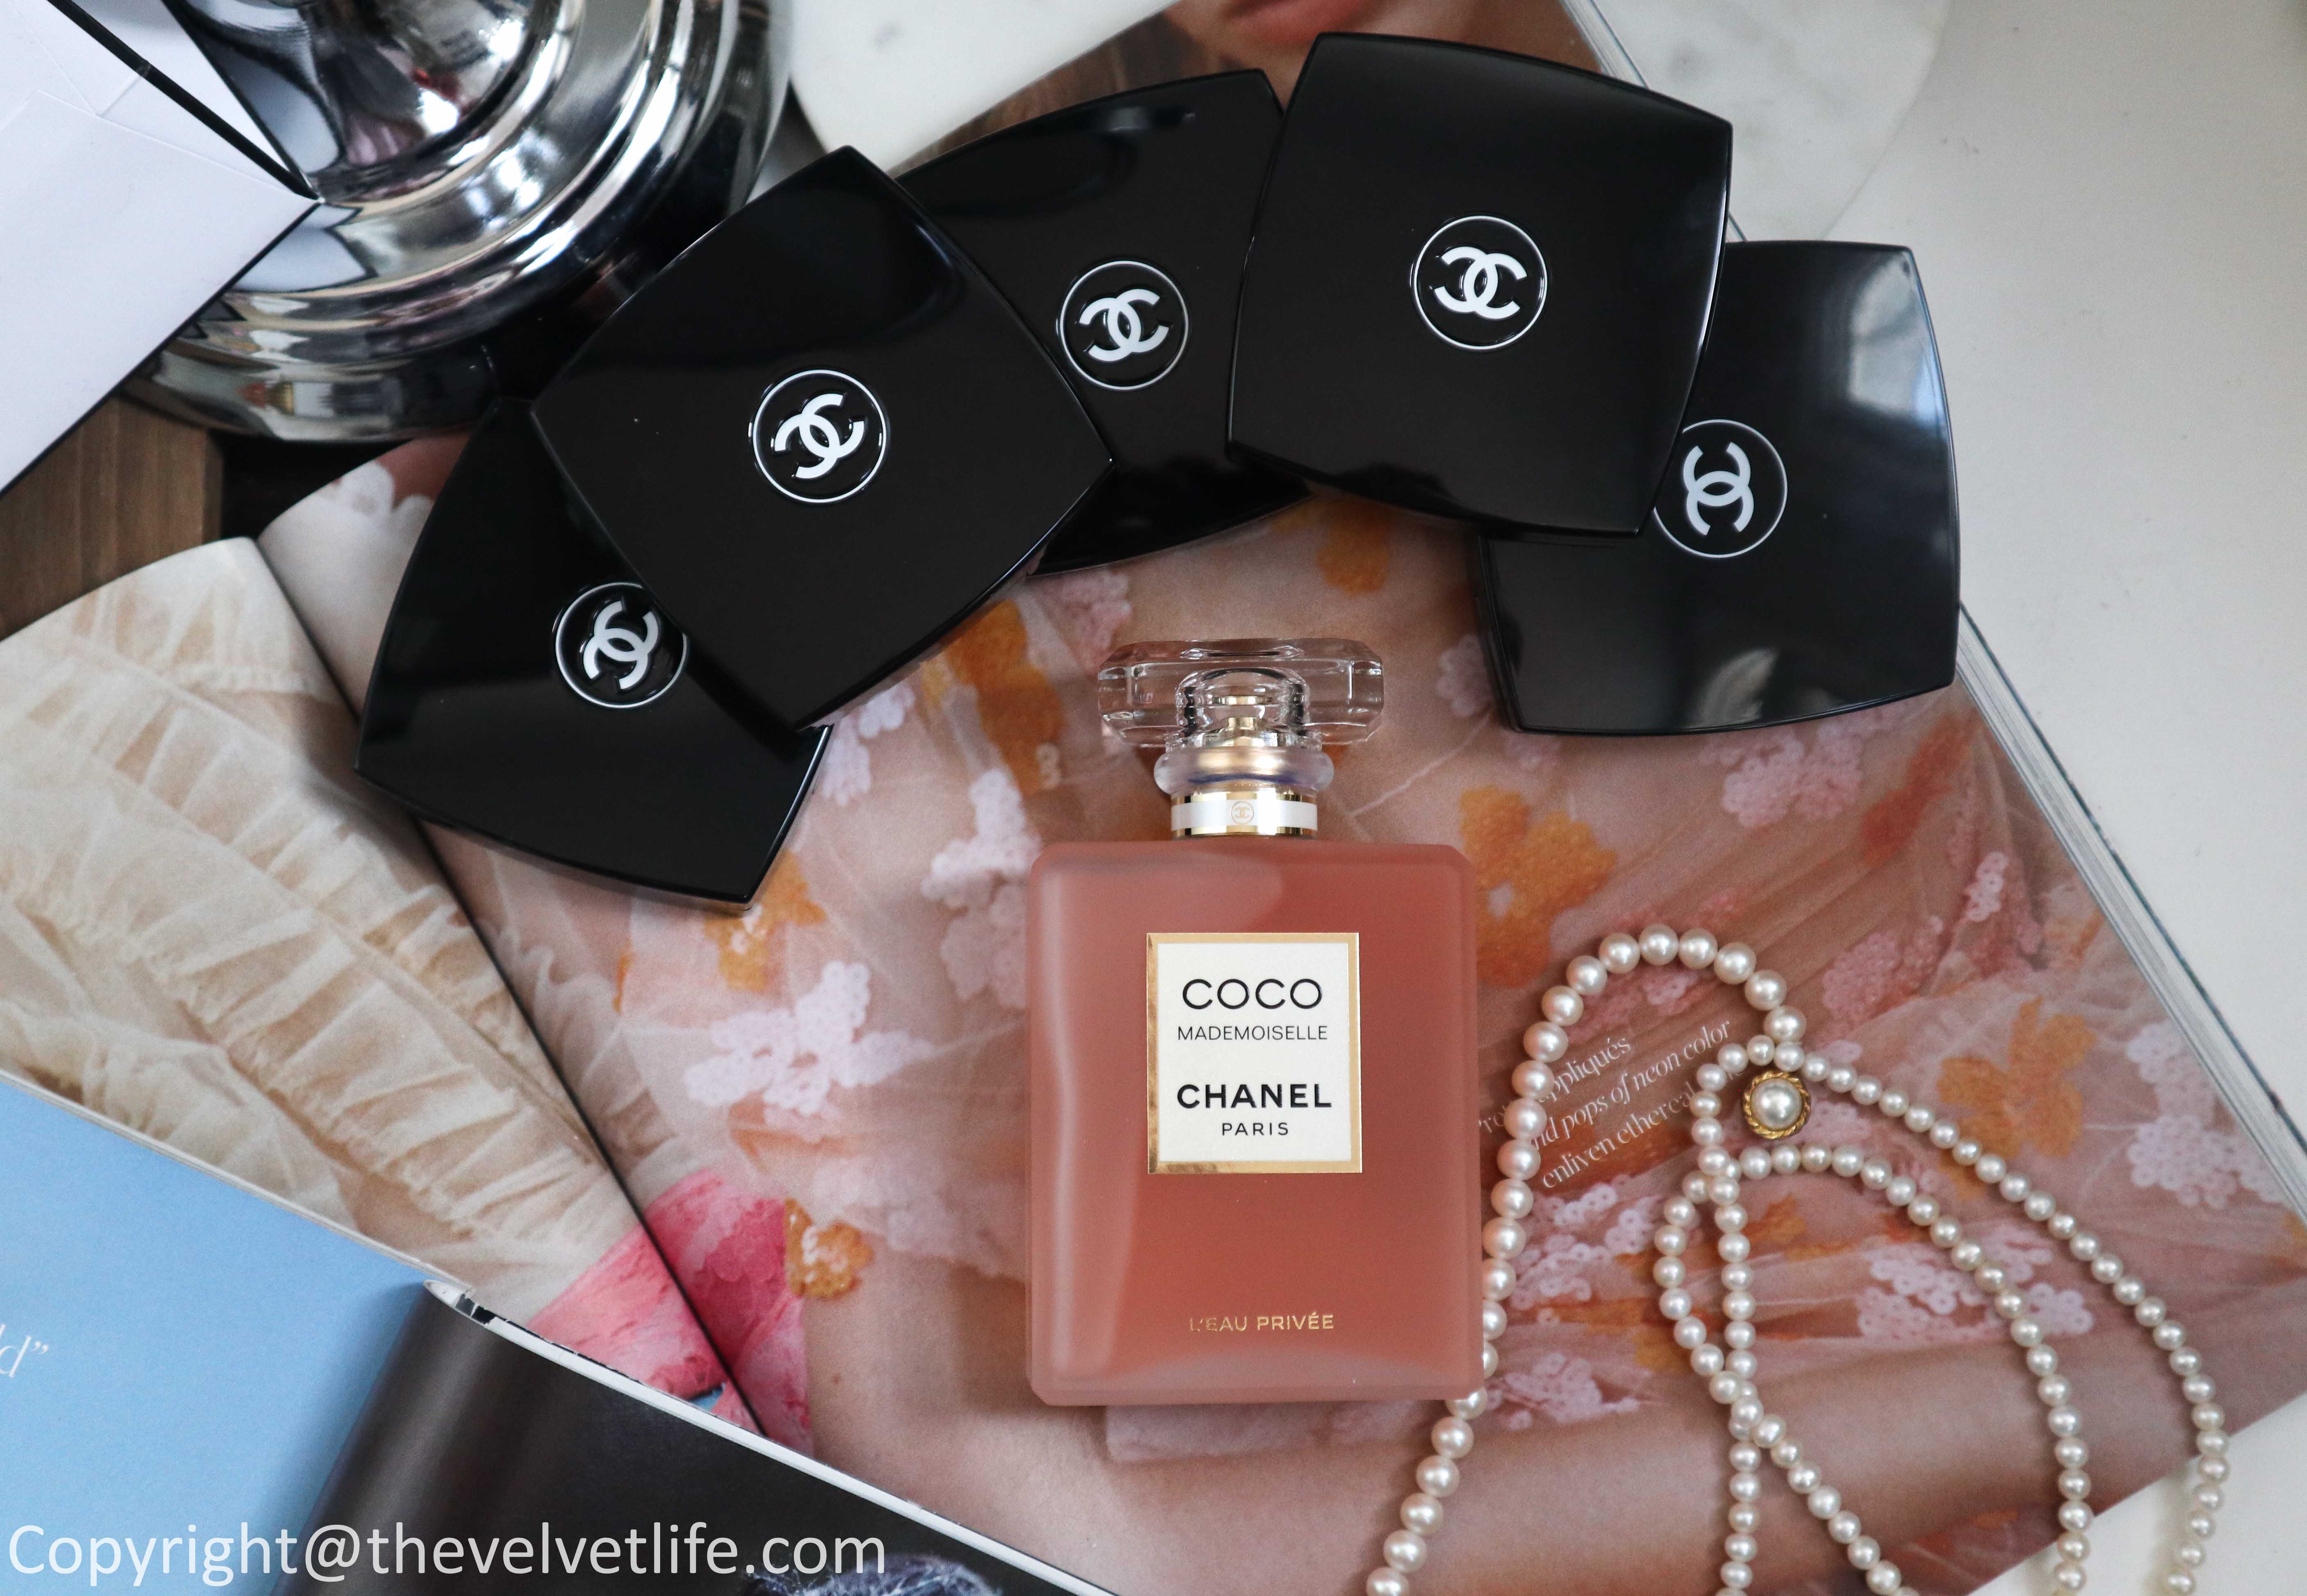 CHANEL Coco Mademoiselle L'Eau Privée Night Fragrance